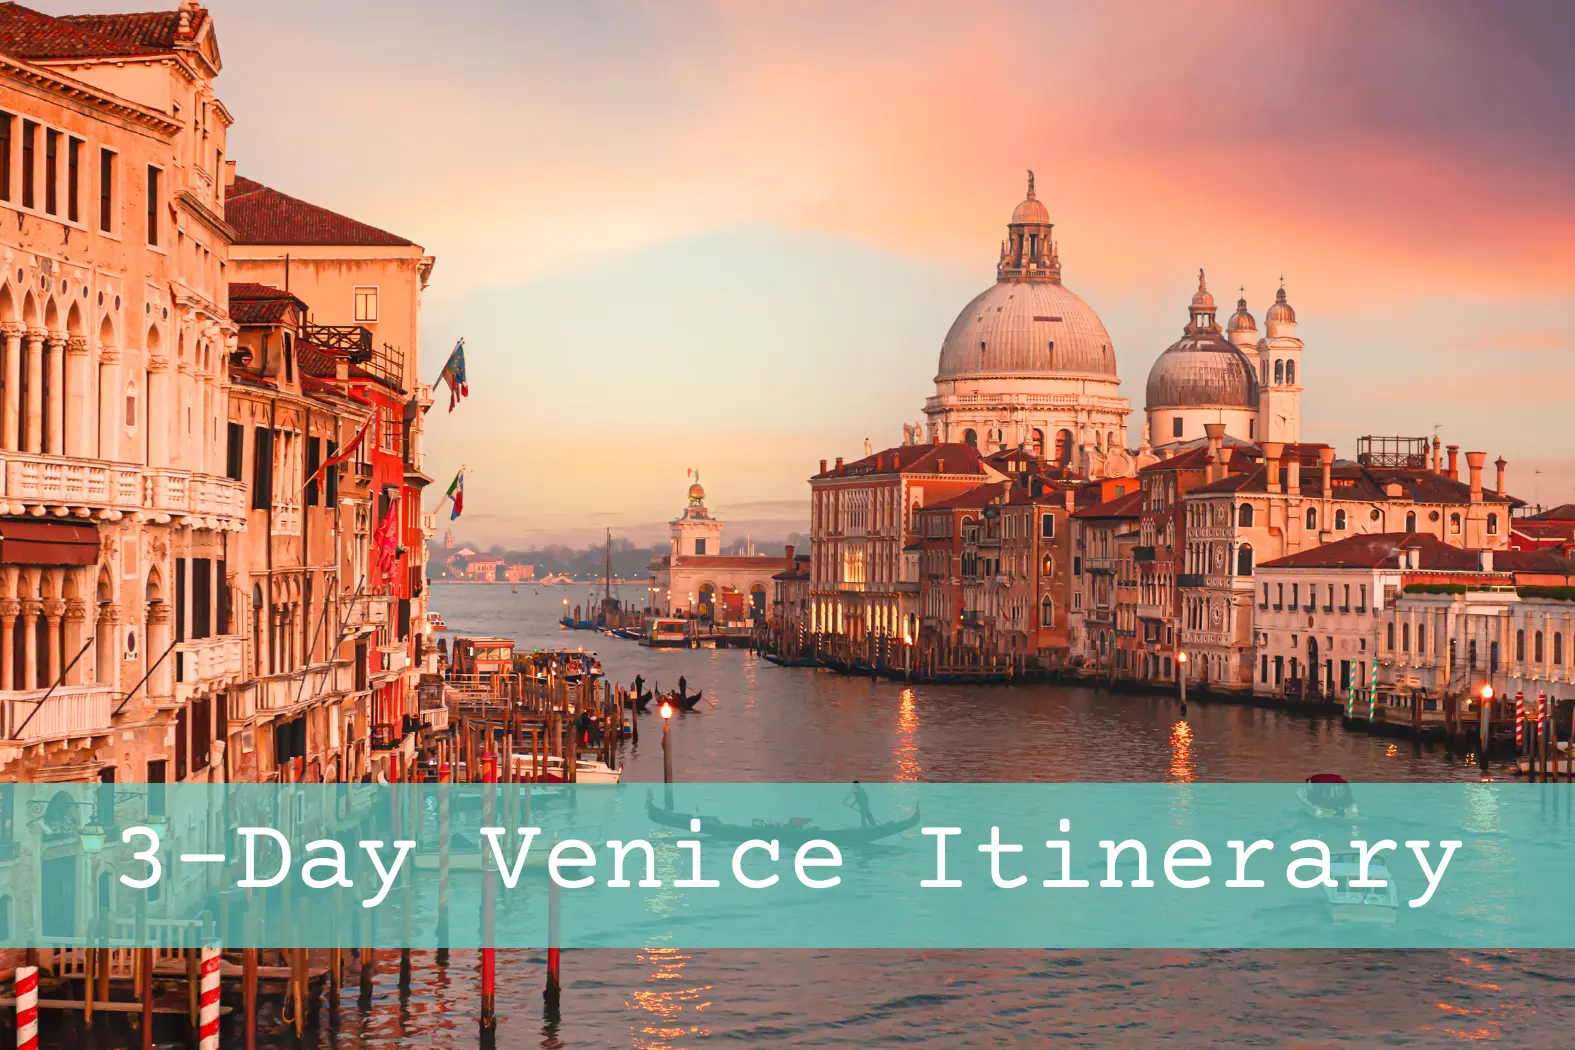 Venice 3-Day Itinerary